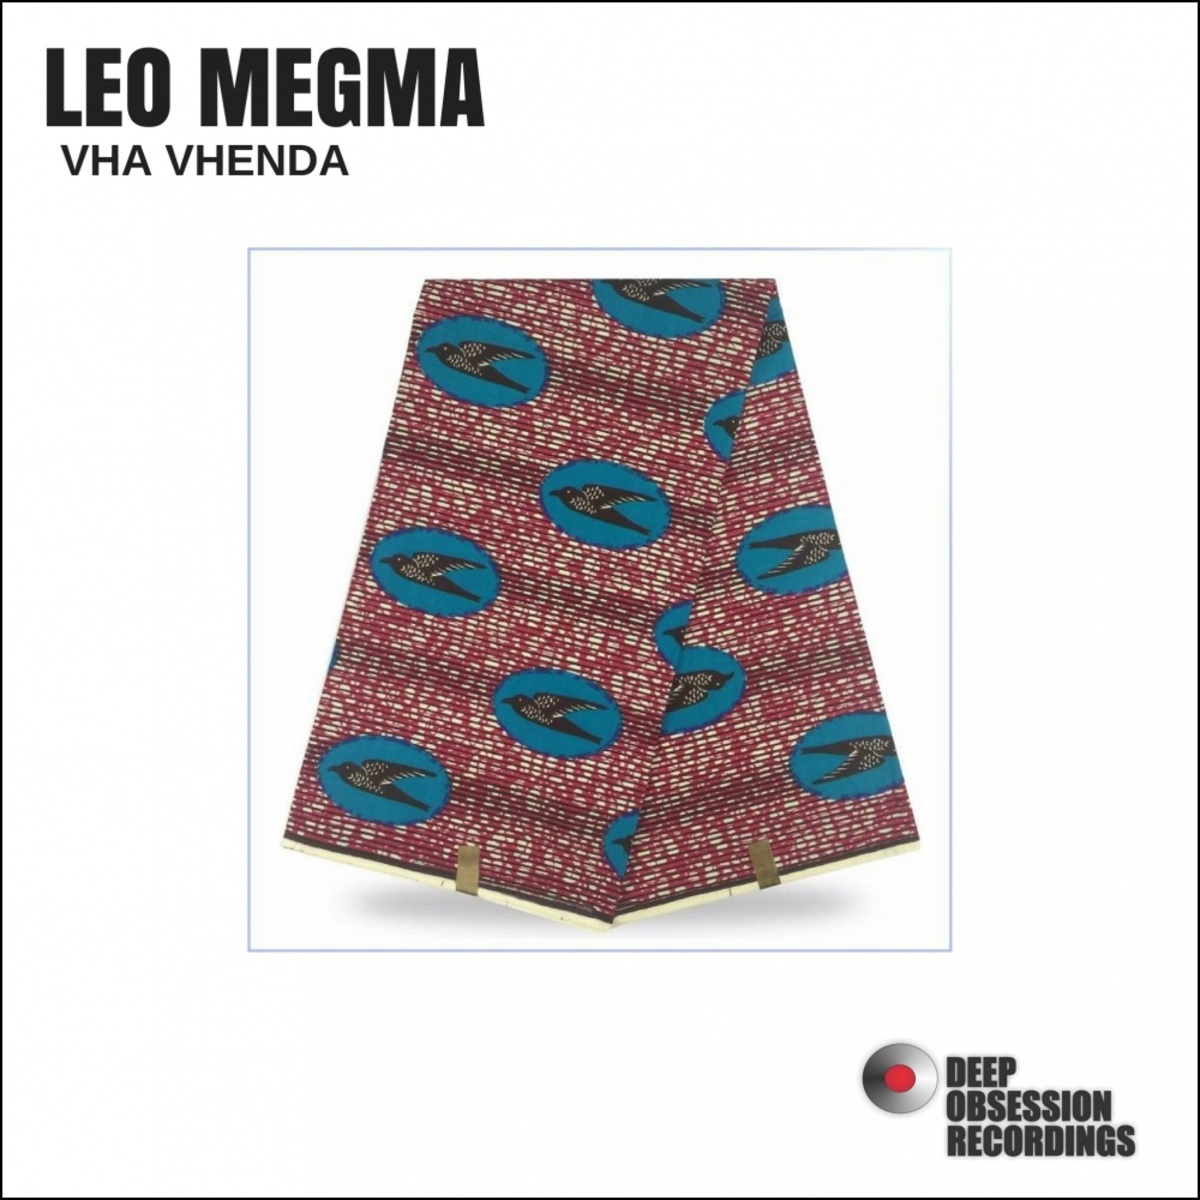 Leo Megma - Vha Venda / Deep Obsession Recordings